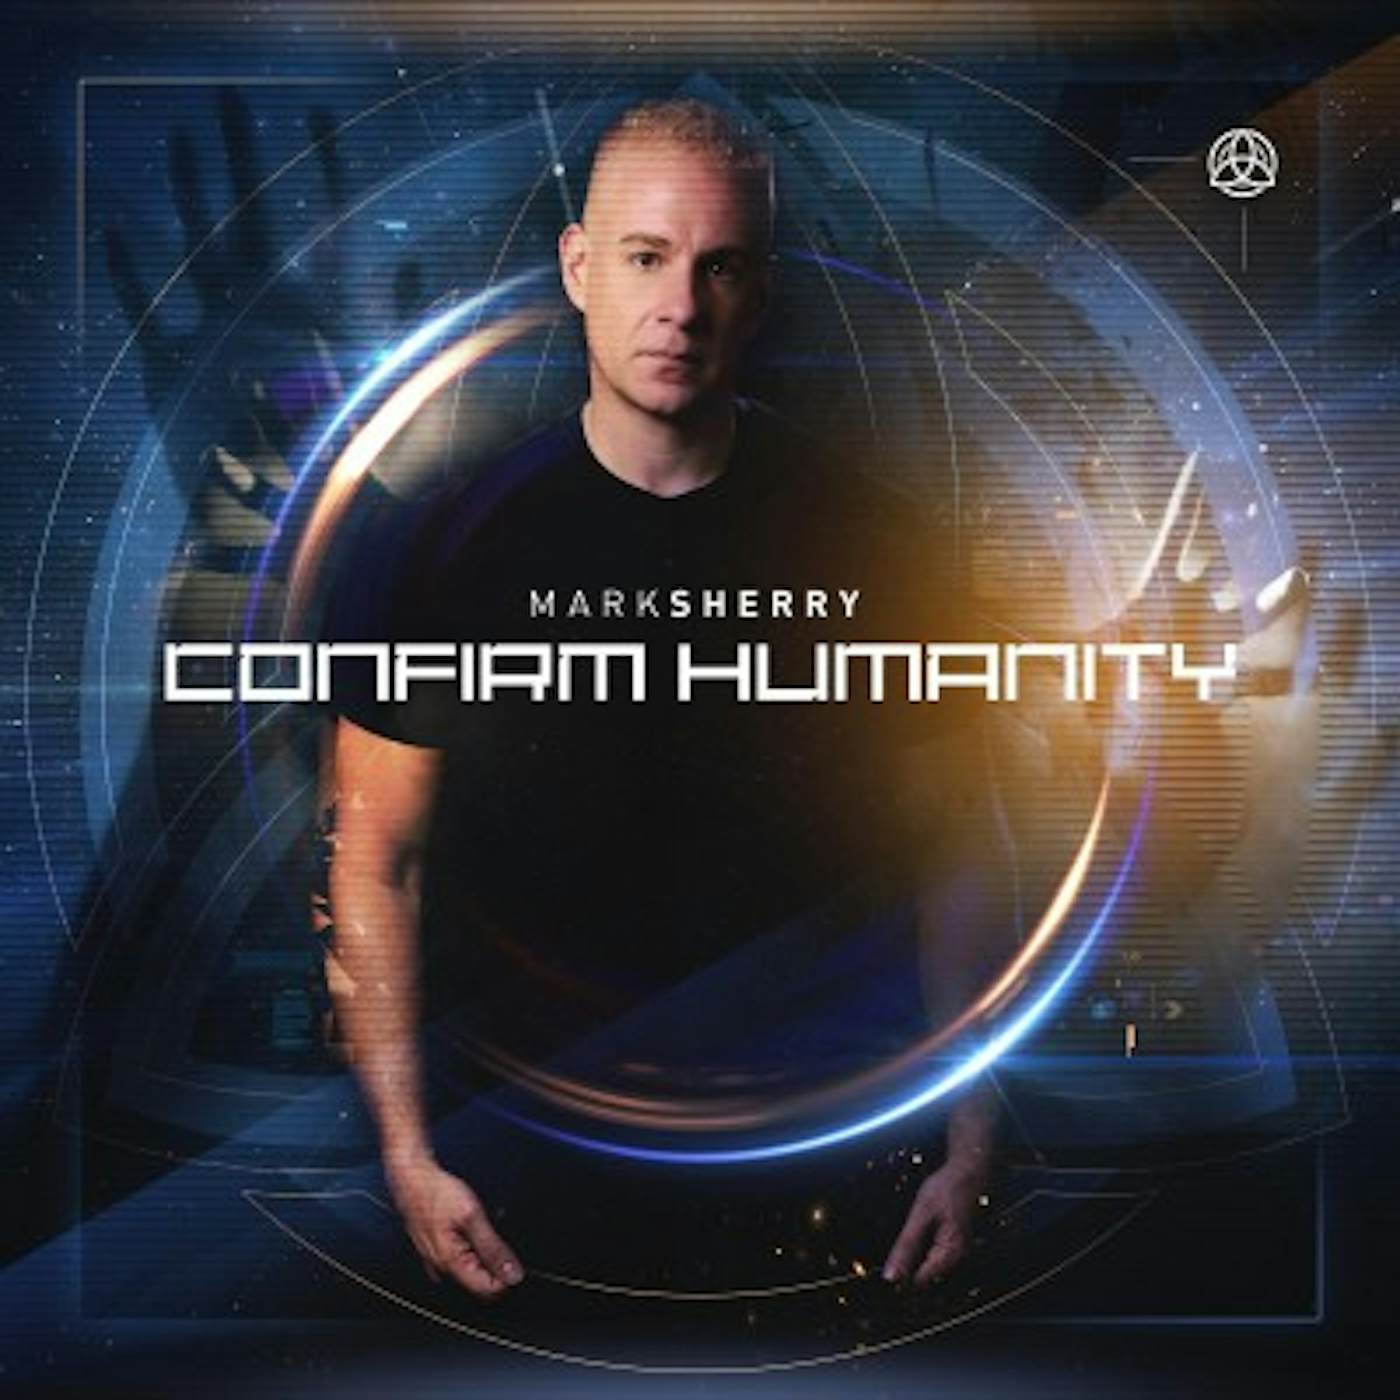 Mark Sherry CONFIM HUMANITY CD